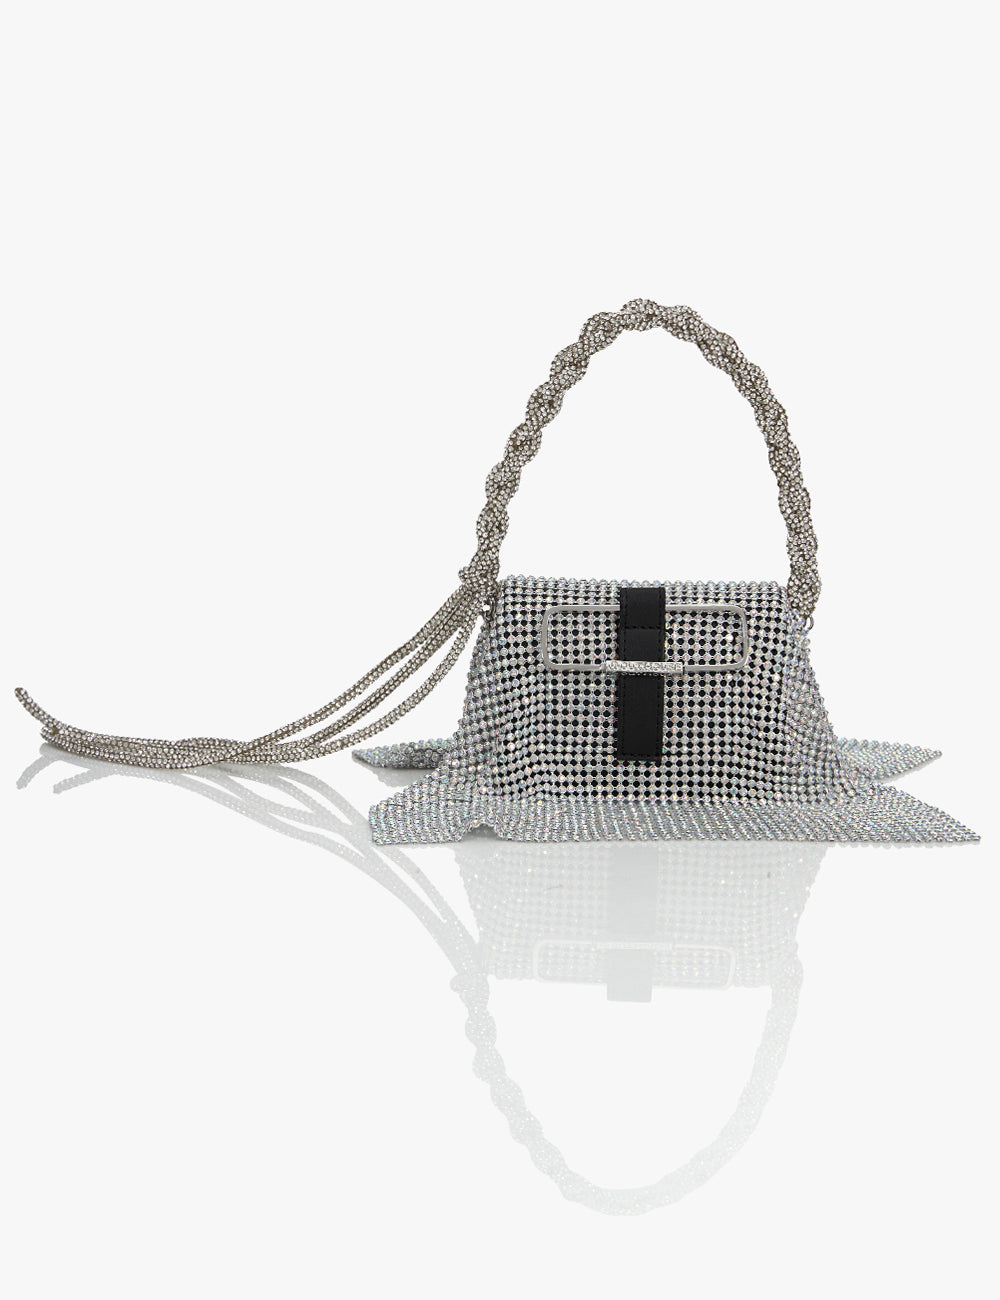 Luxury Designer Crystal Bucket Cult Gaia Rhinestone Bag With Handle Evening  Purse And Handbag From Stylisheendibags, $8.16 | DHgate.Com